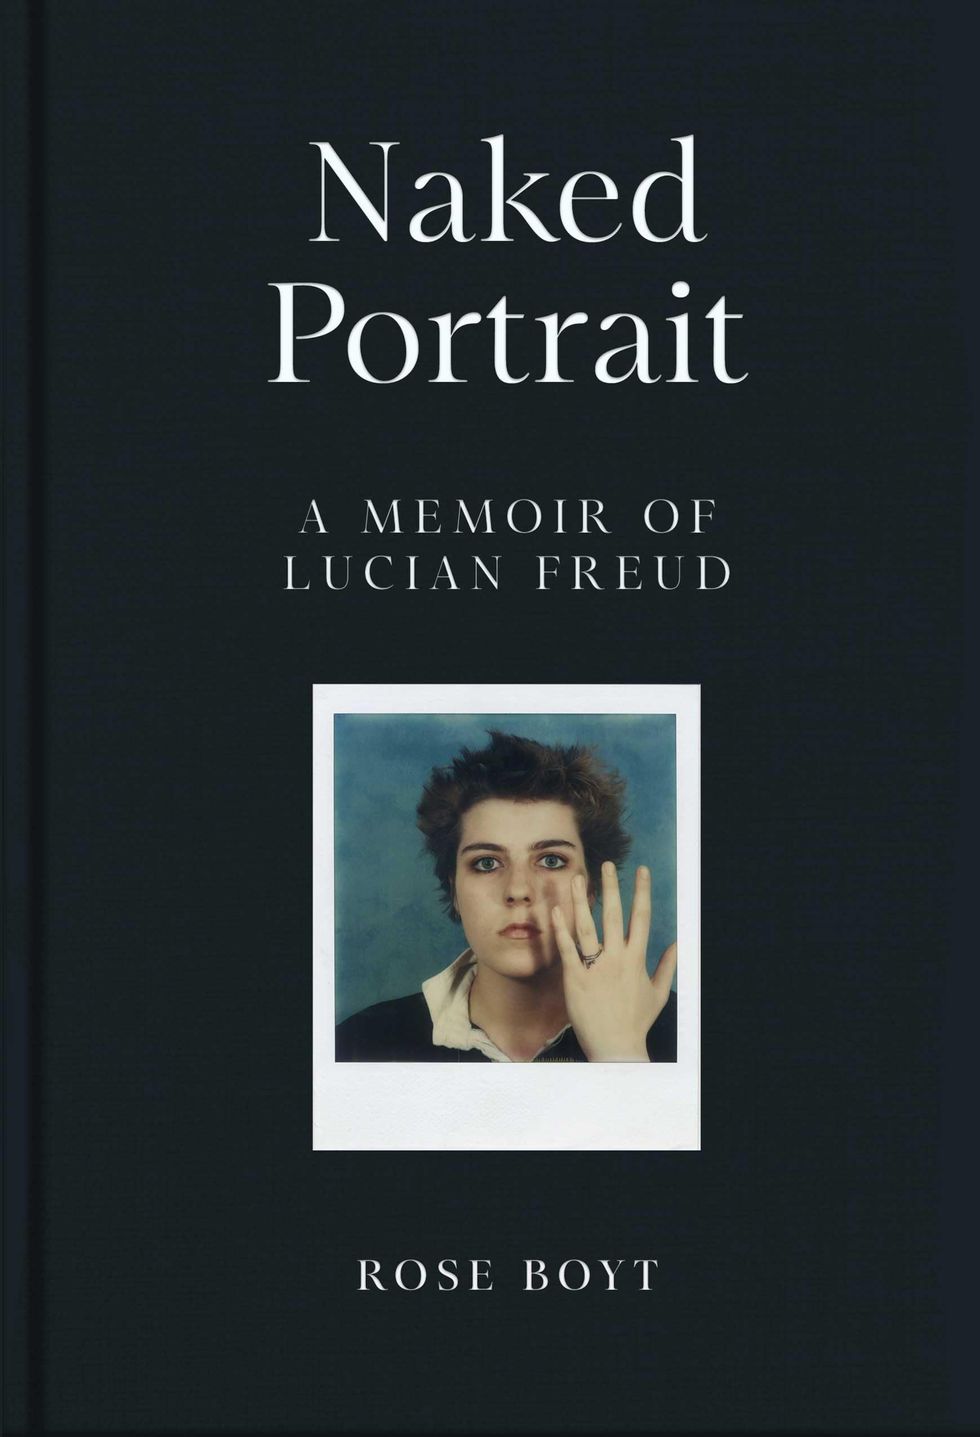 Naked Portrait: A Memoir of Lucian Freud by Rose Boyt